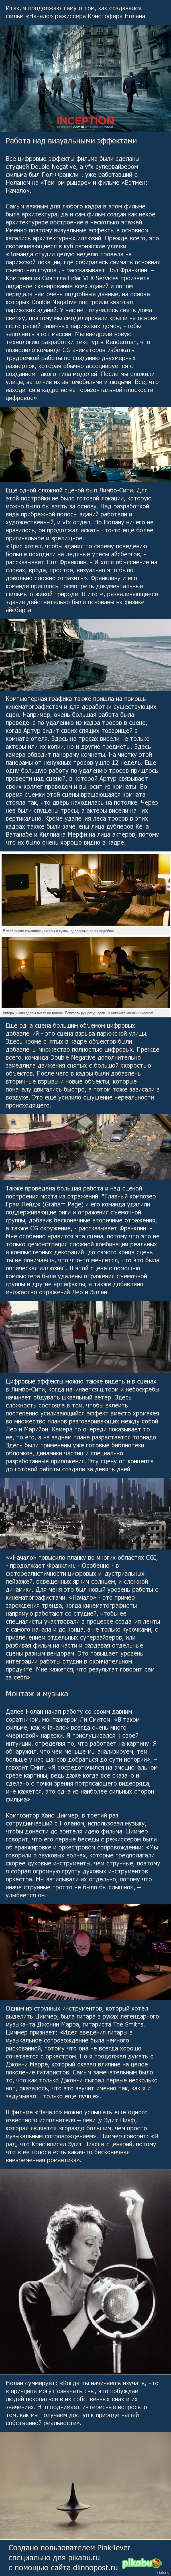    &quot;&quot;. .2   <a href="http://pikabu.ru/story/istoriya_sozdaniya_filma_quotnachaloquot_ch1_2598295">http://pikabu.ru/story/_2598295</a>